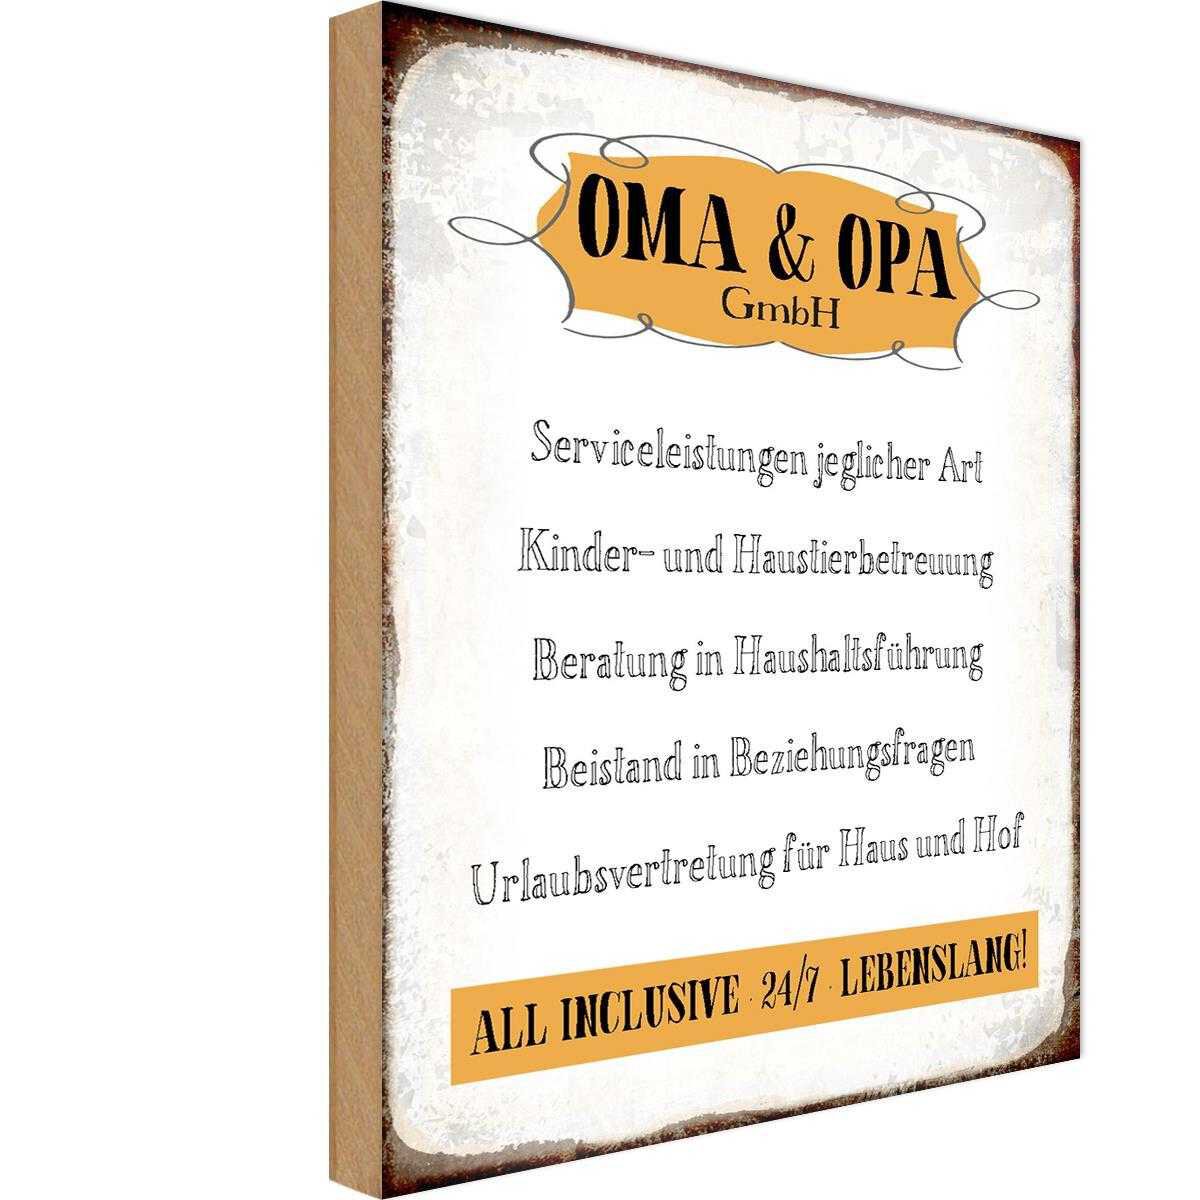 Holzschild 20x30 cm - Oma Opa GmbH 24/7 lebenslang